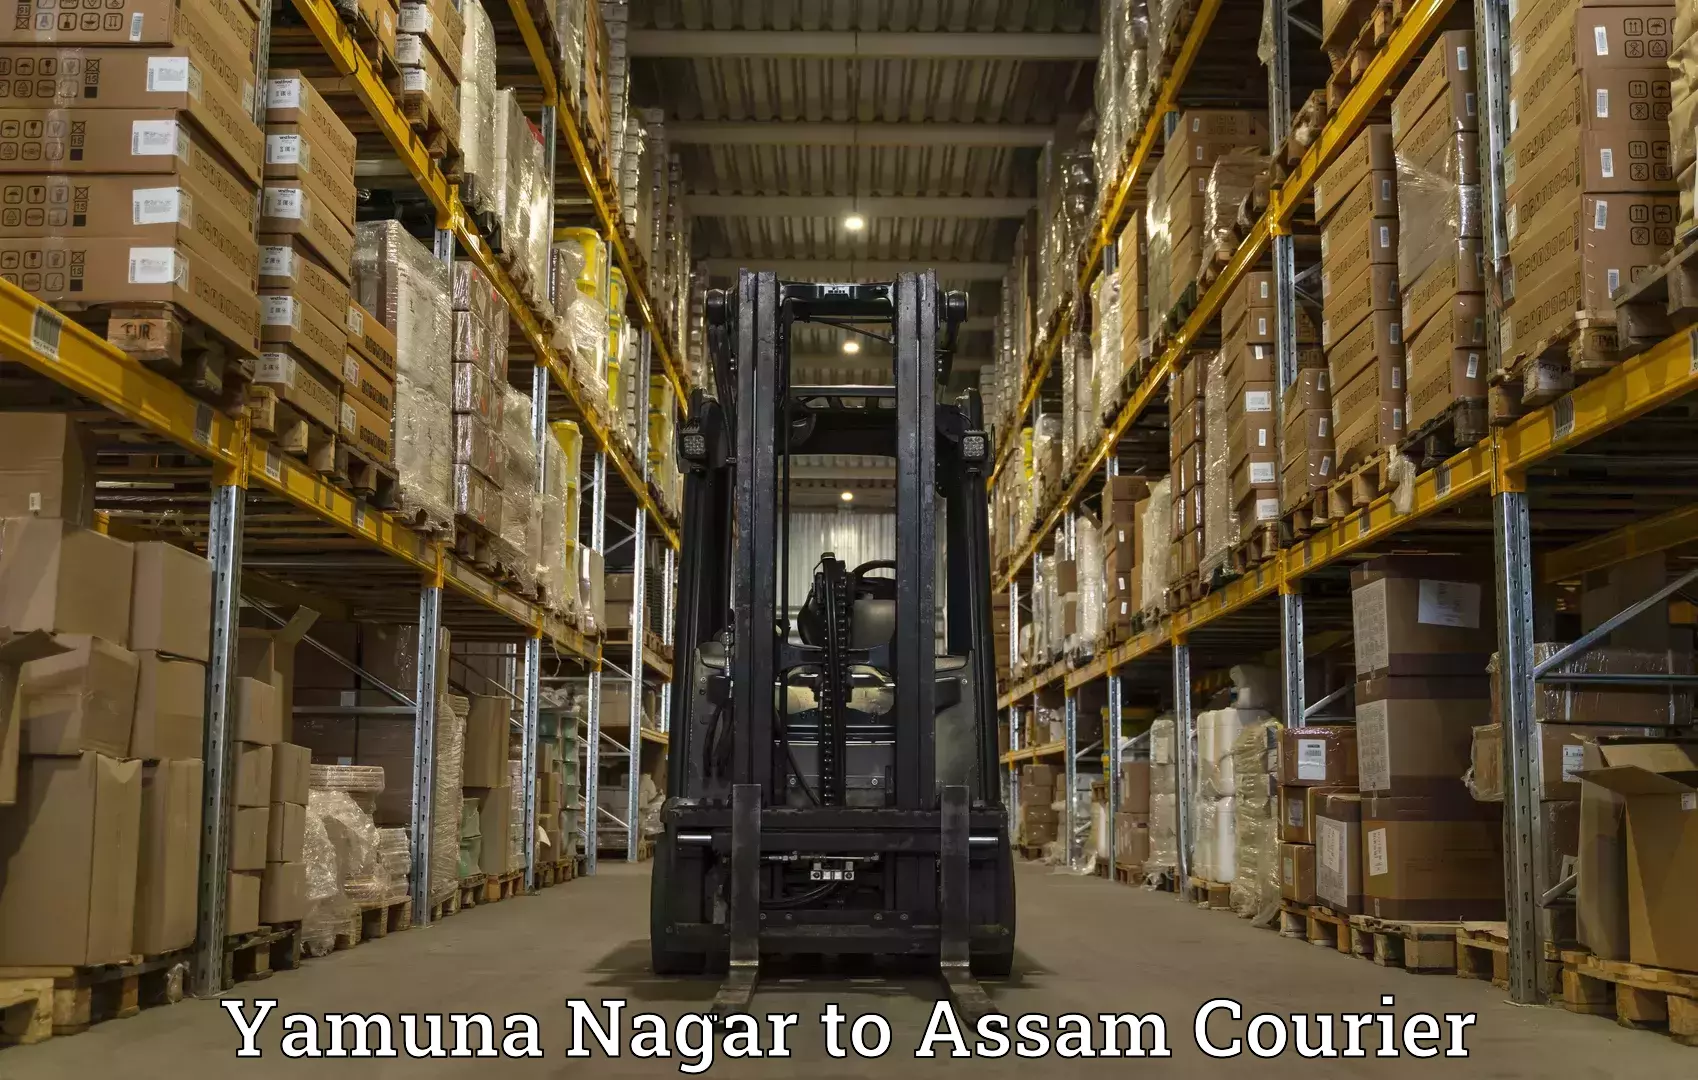 State-of-the-art courier technology Yamuna Nagar to Assam